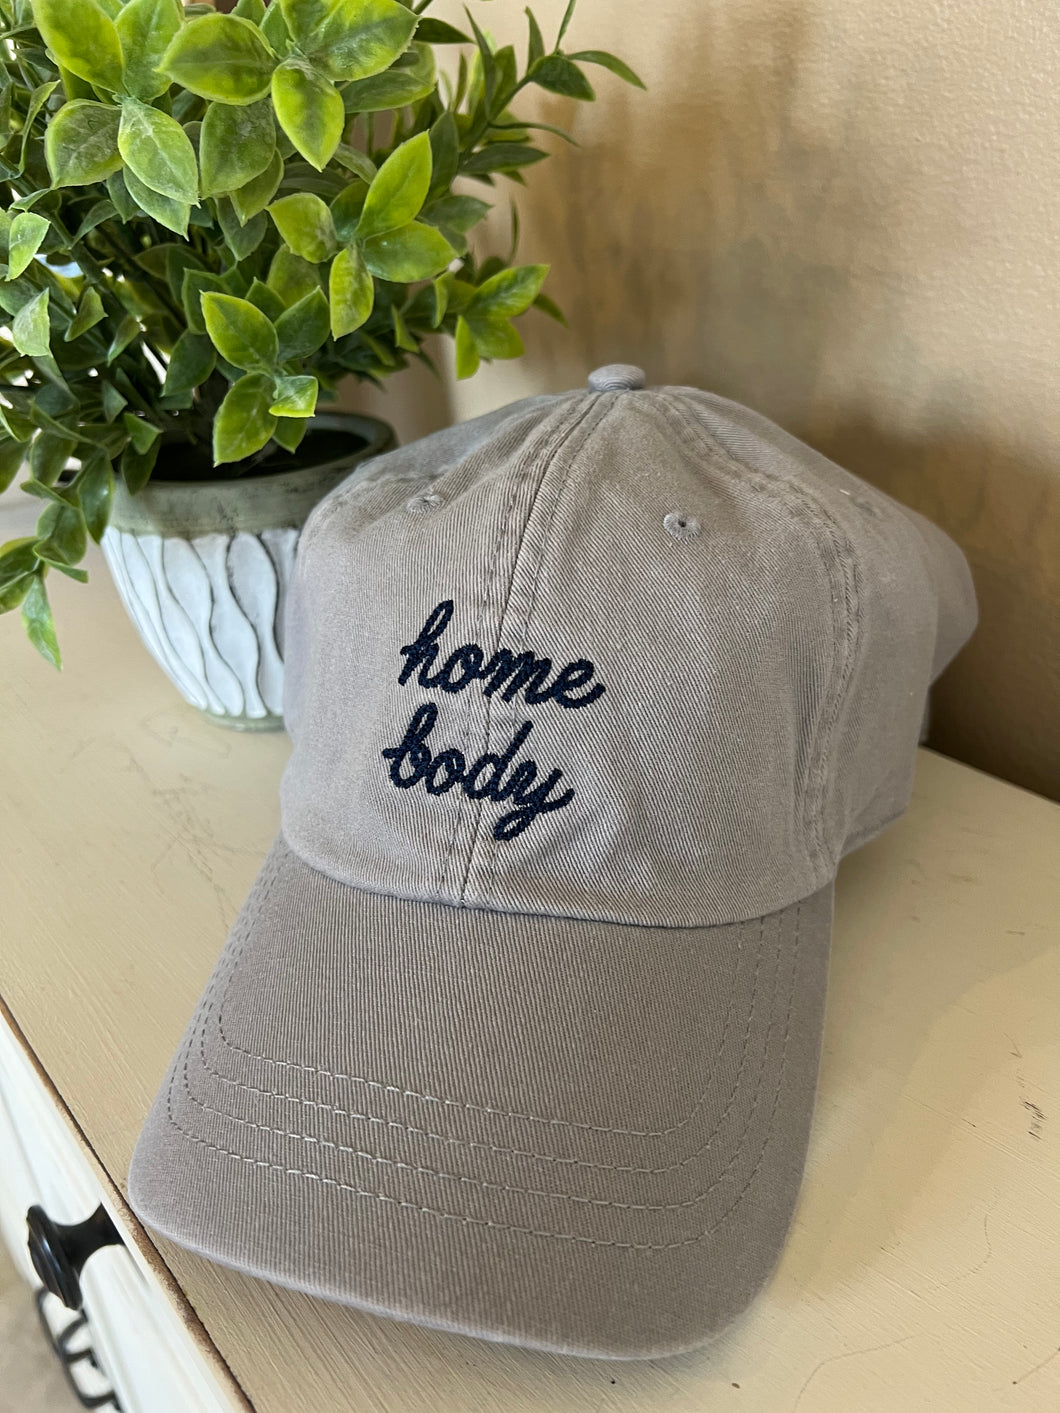 Home body Hat - Gray